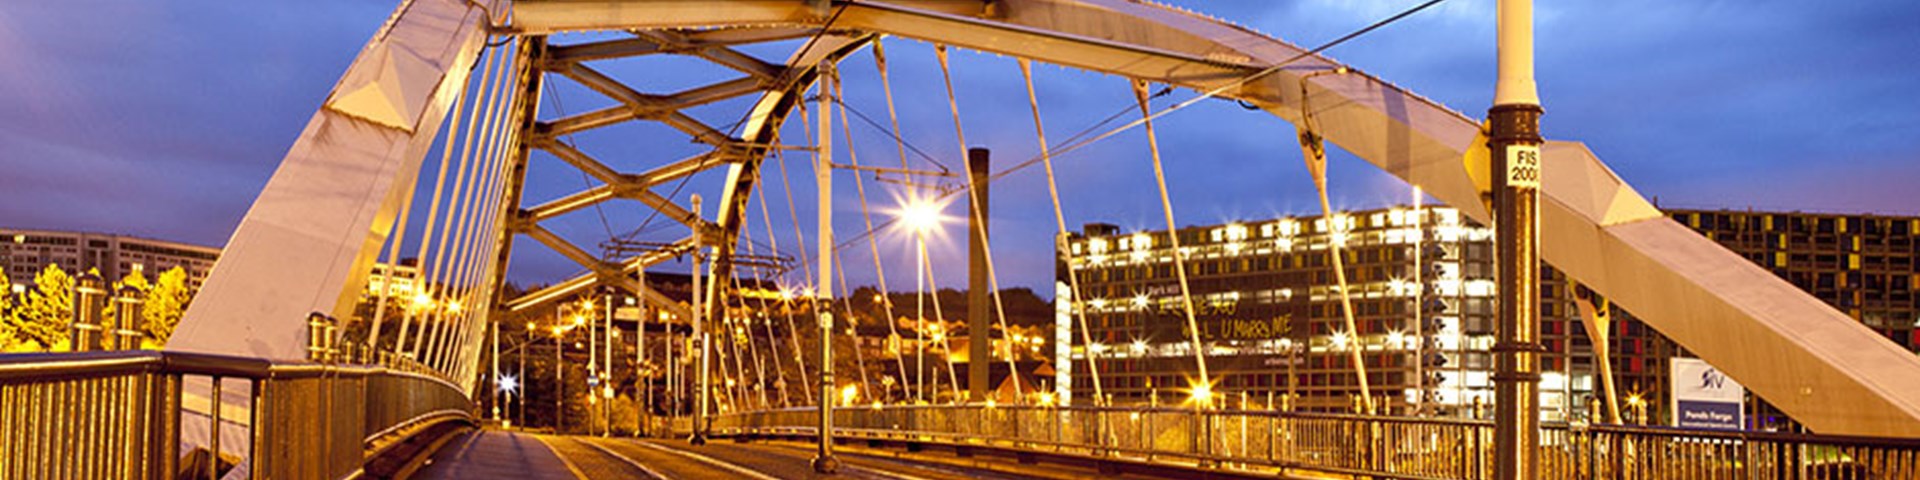 Sheffield bridge at night time